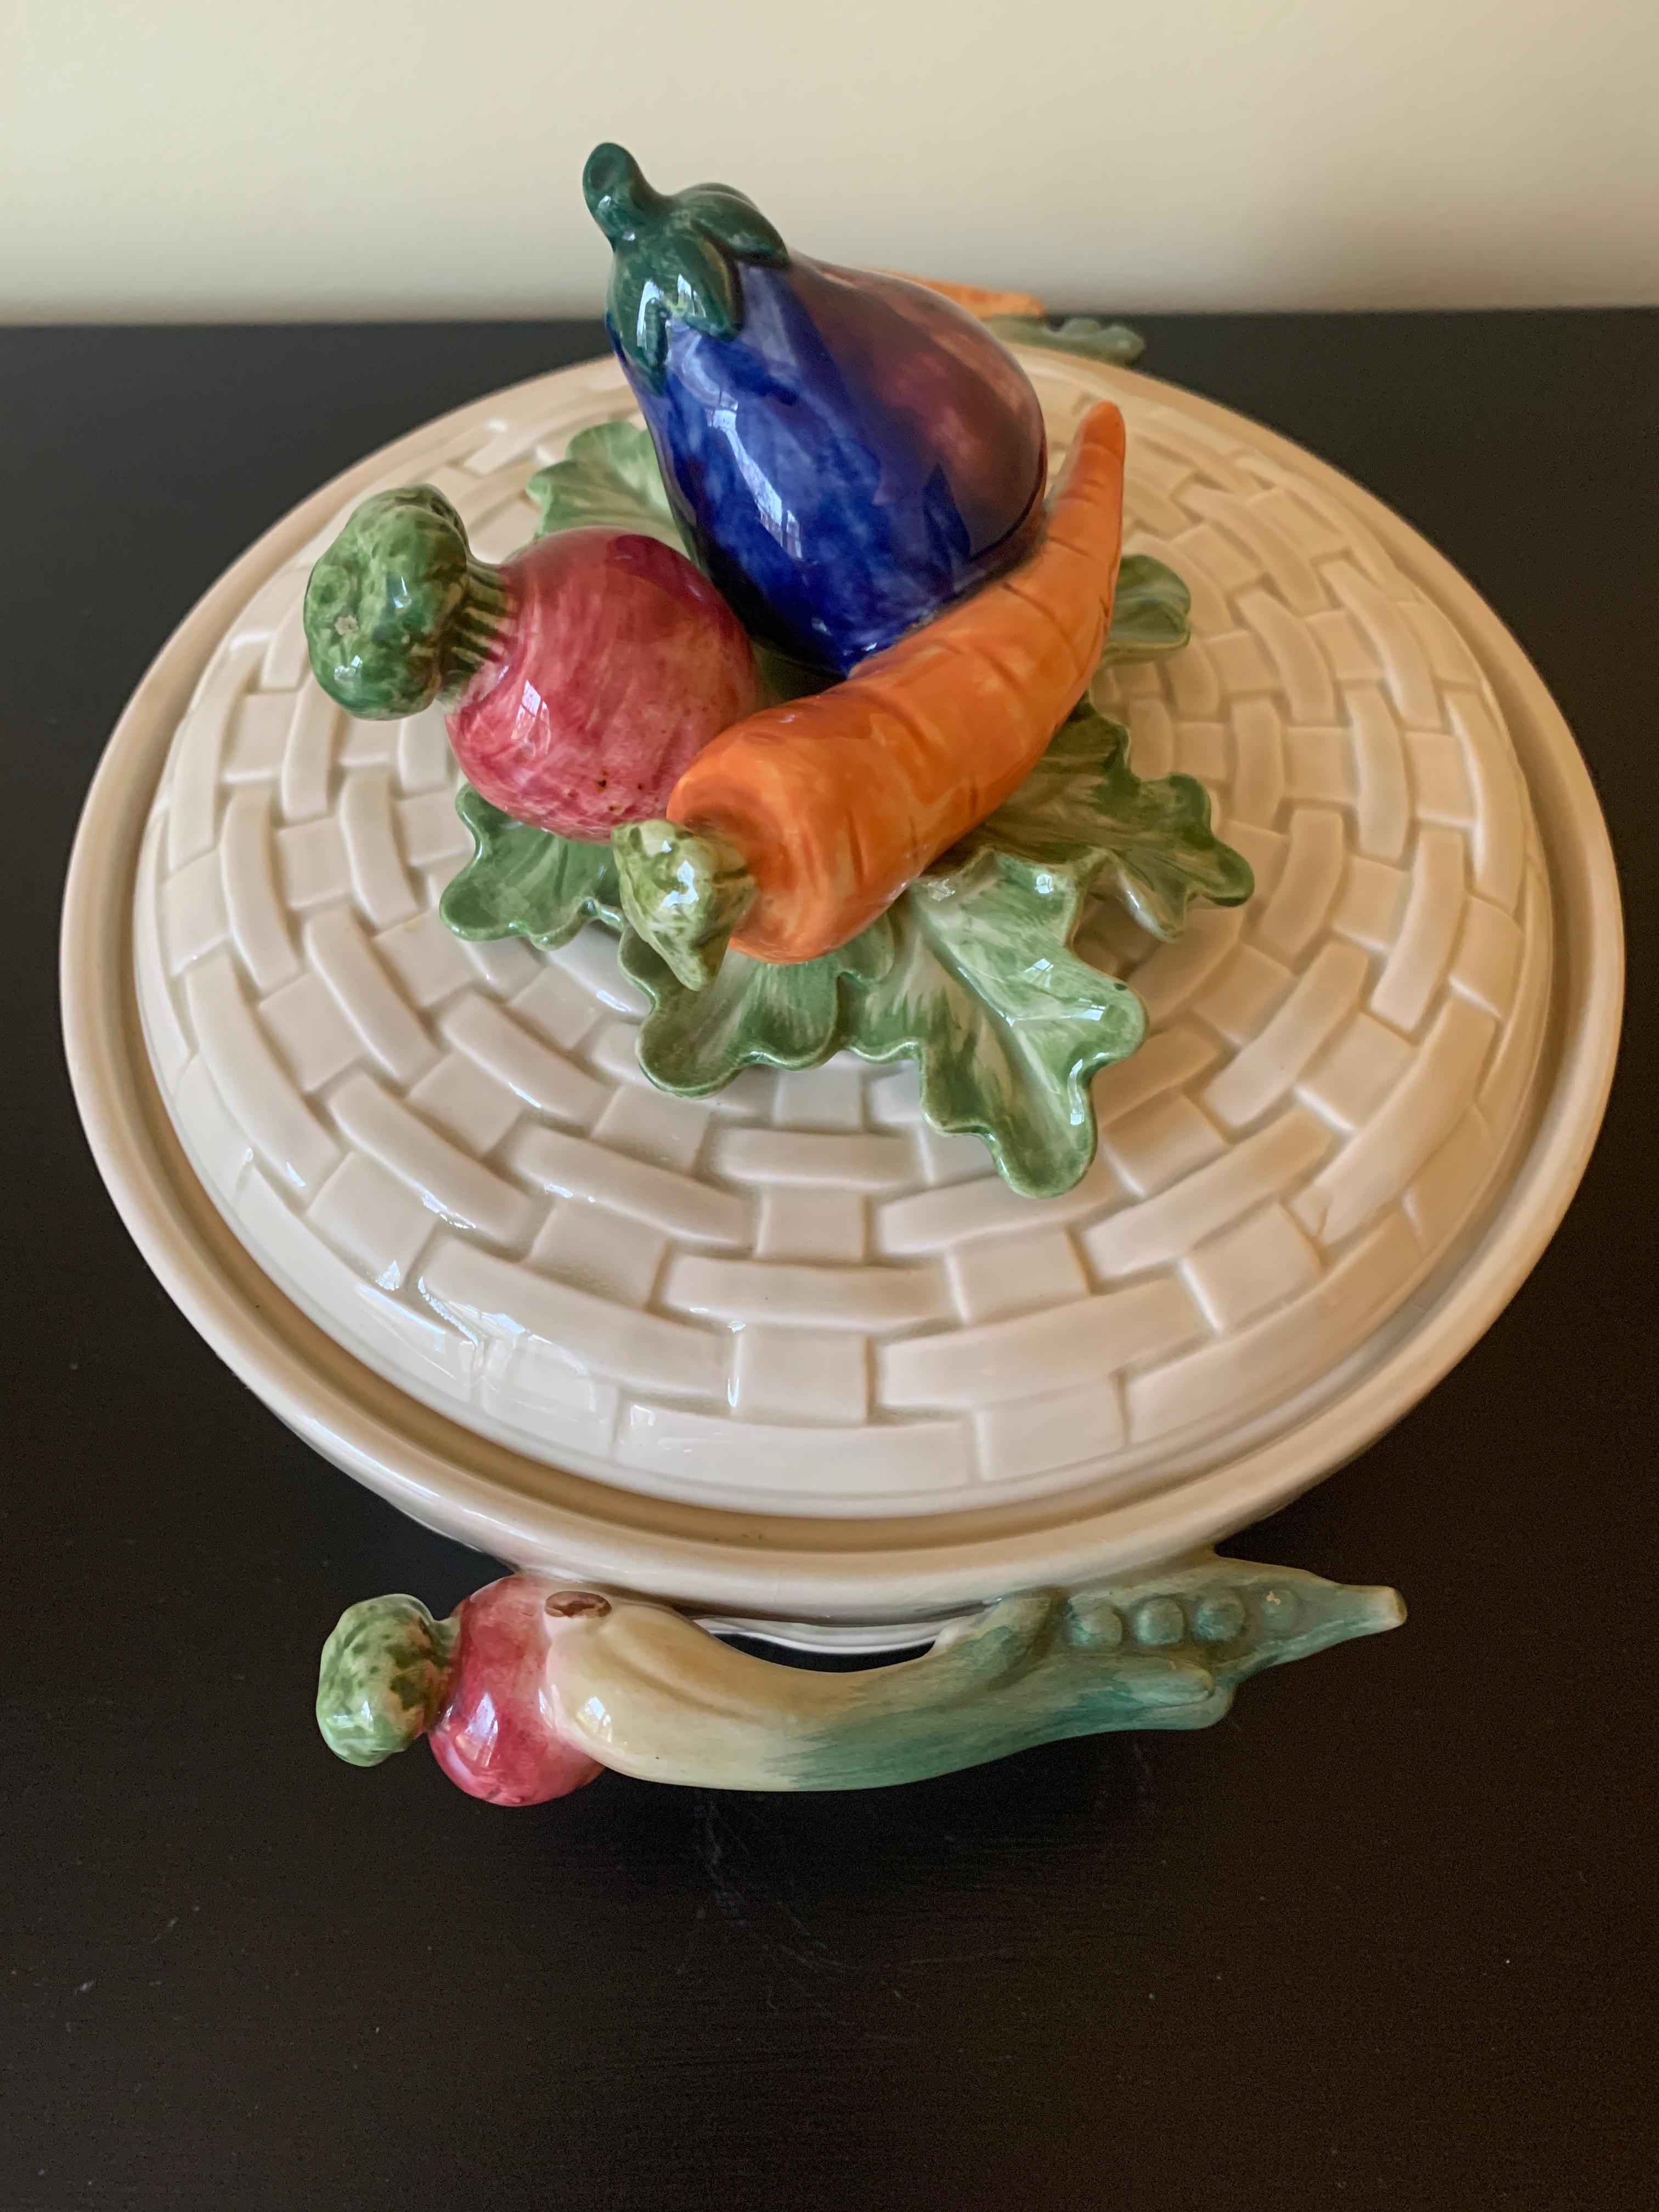 Fitz & Floyd Glazed Ceramic Trompe l'Oeil Woven Basket With Vegetables Casserole For Sale 6